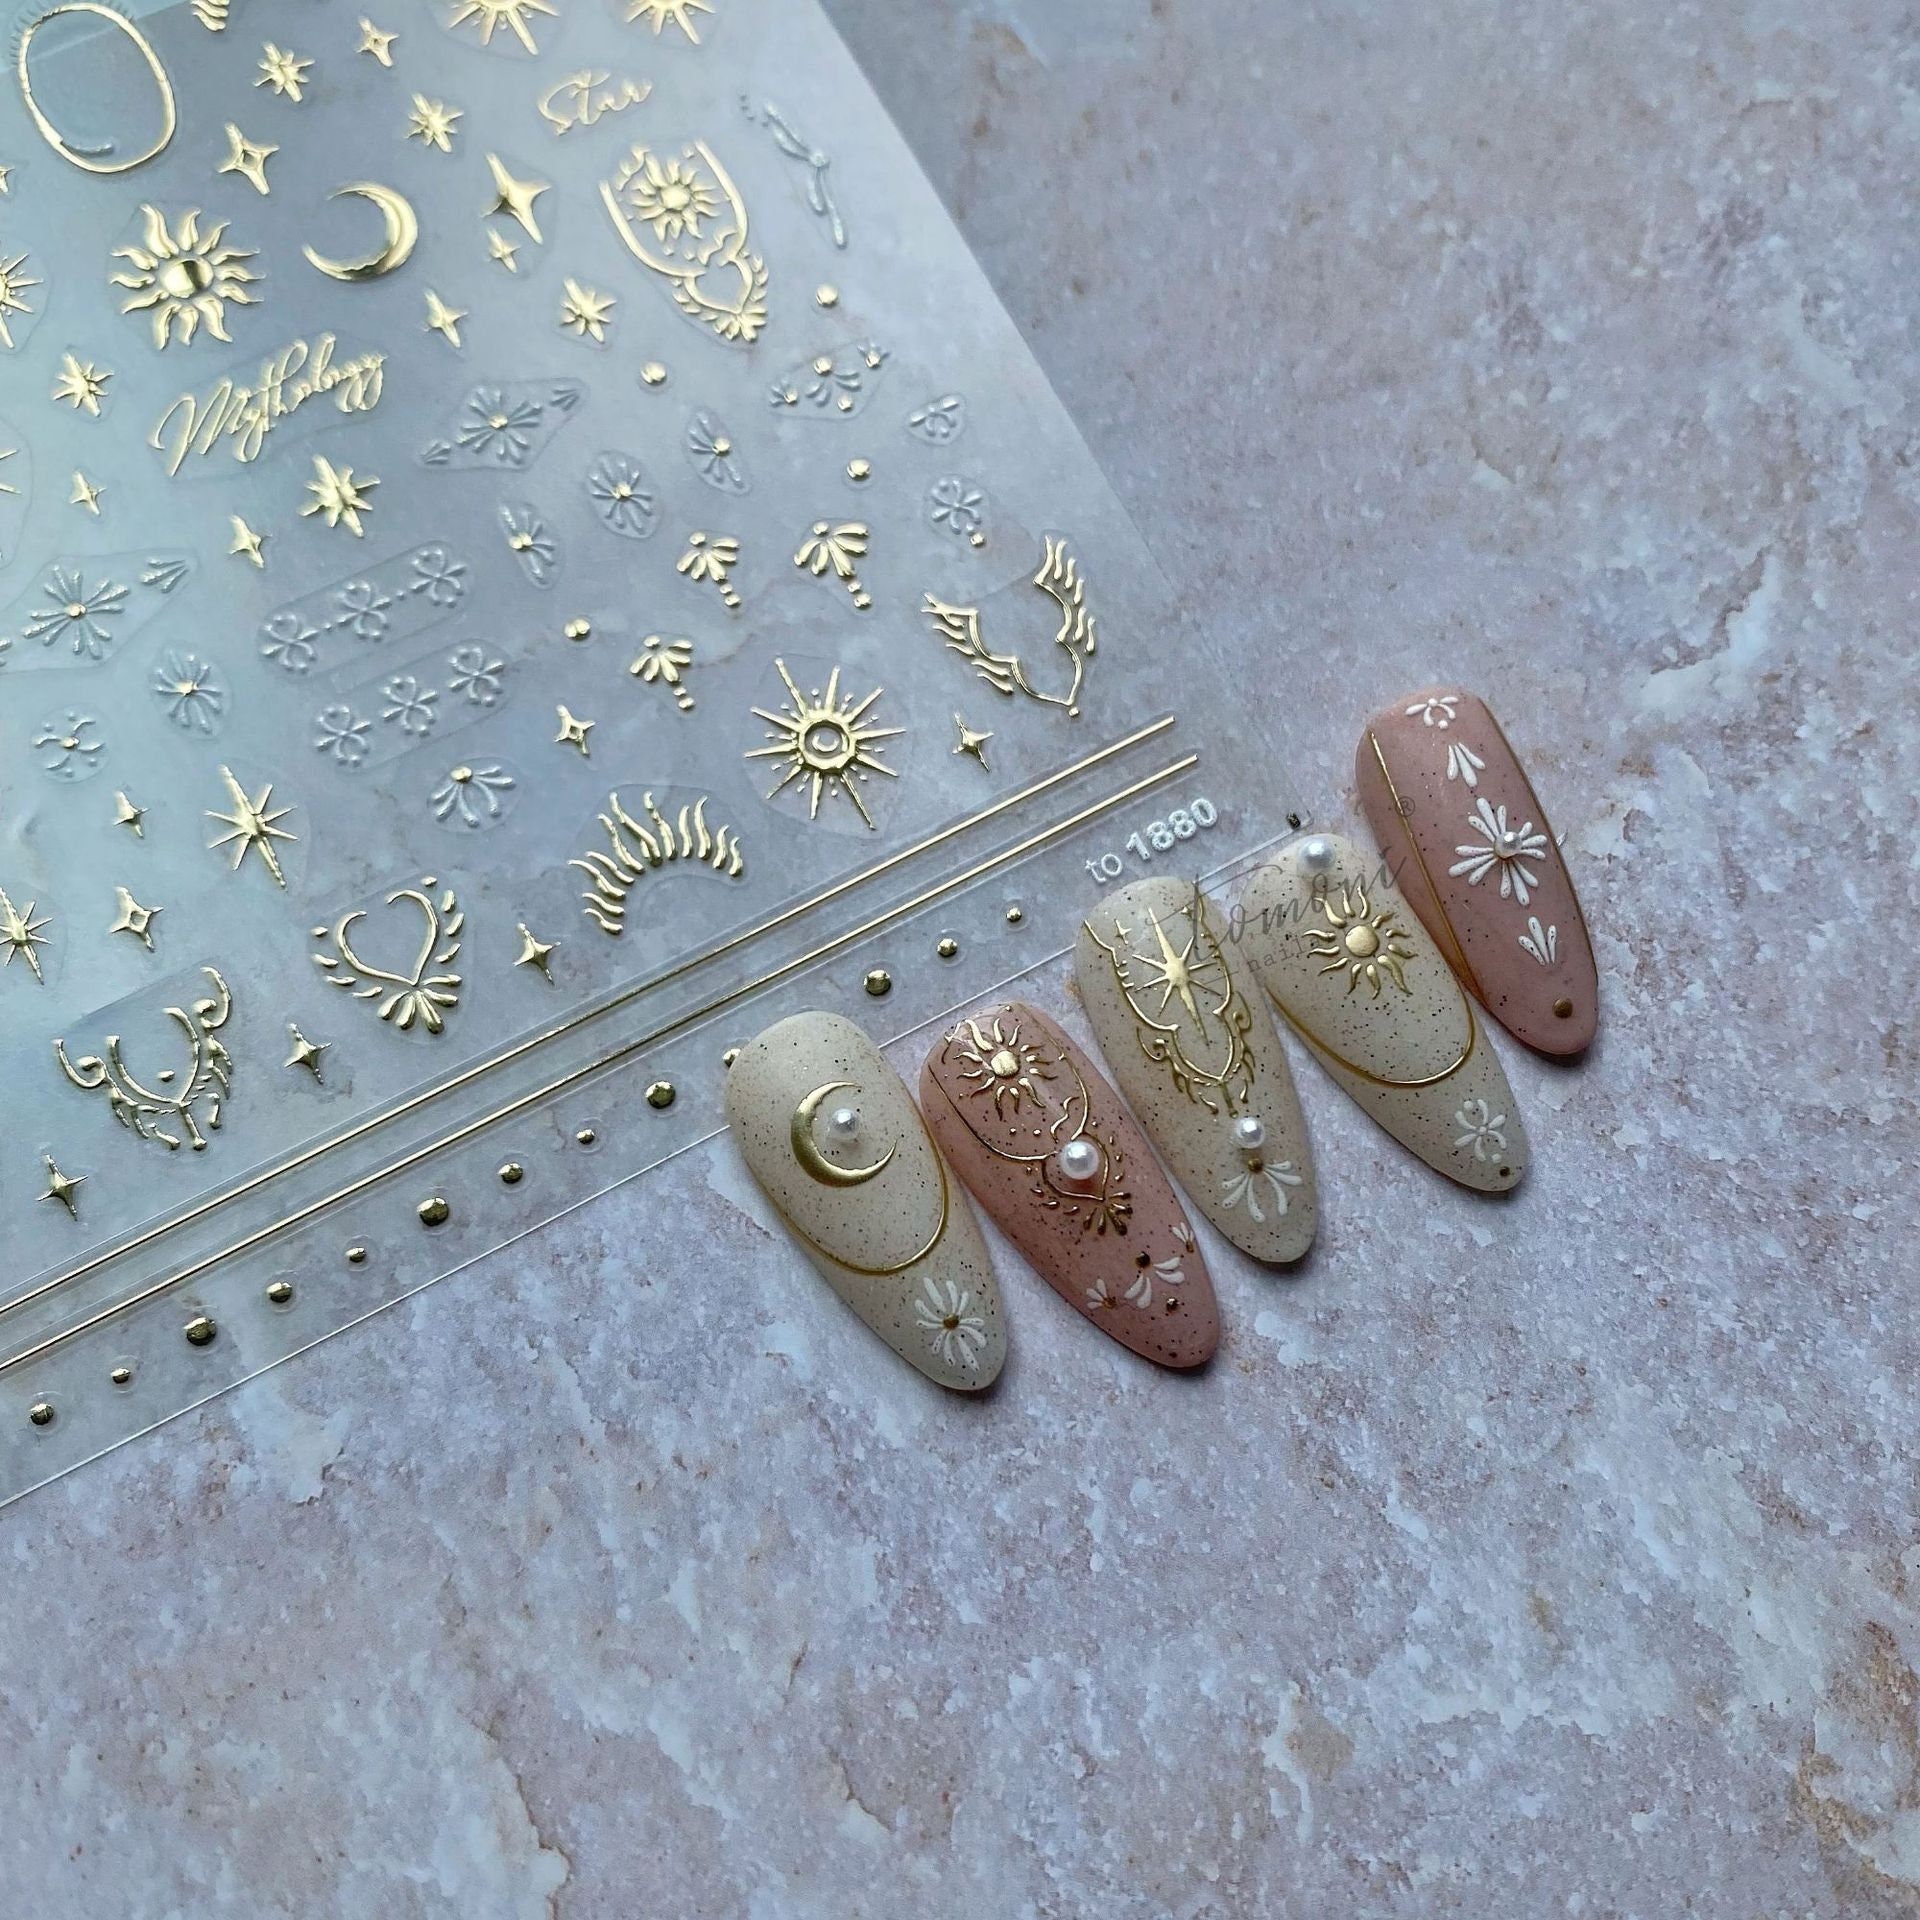 Stars and glitter dots on milky white nails | White nails, Manicure, Nails